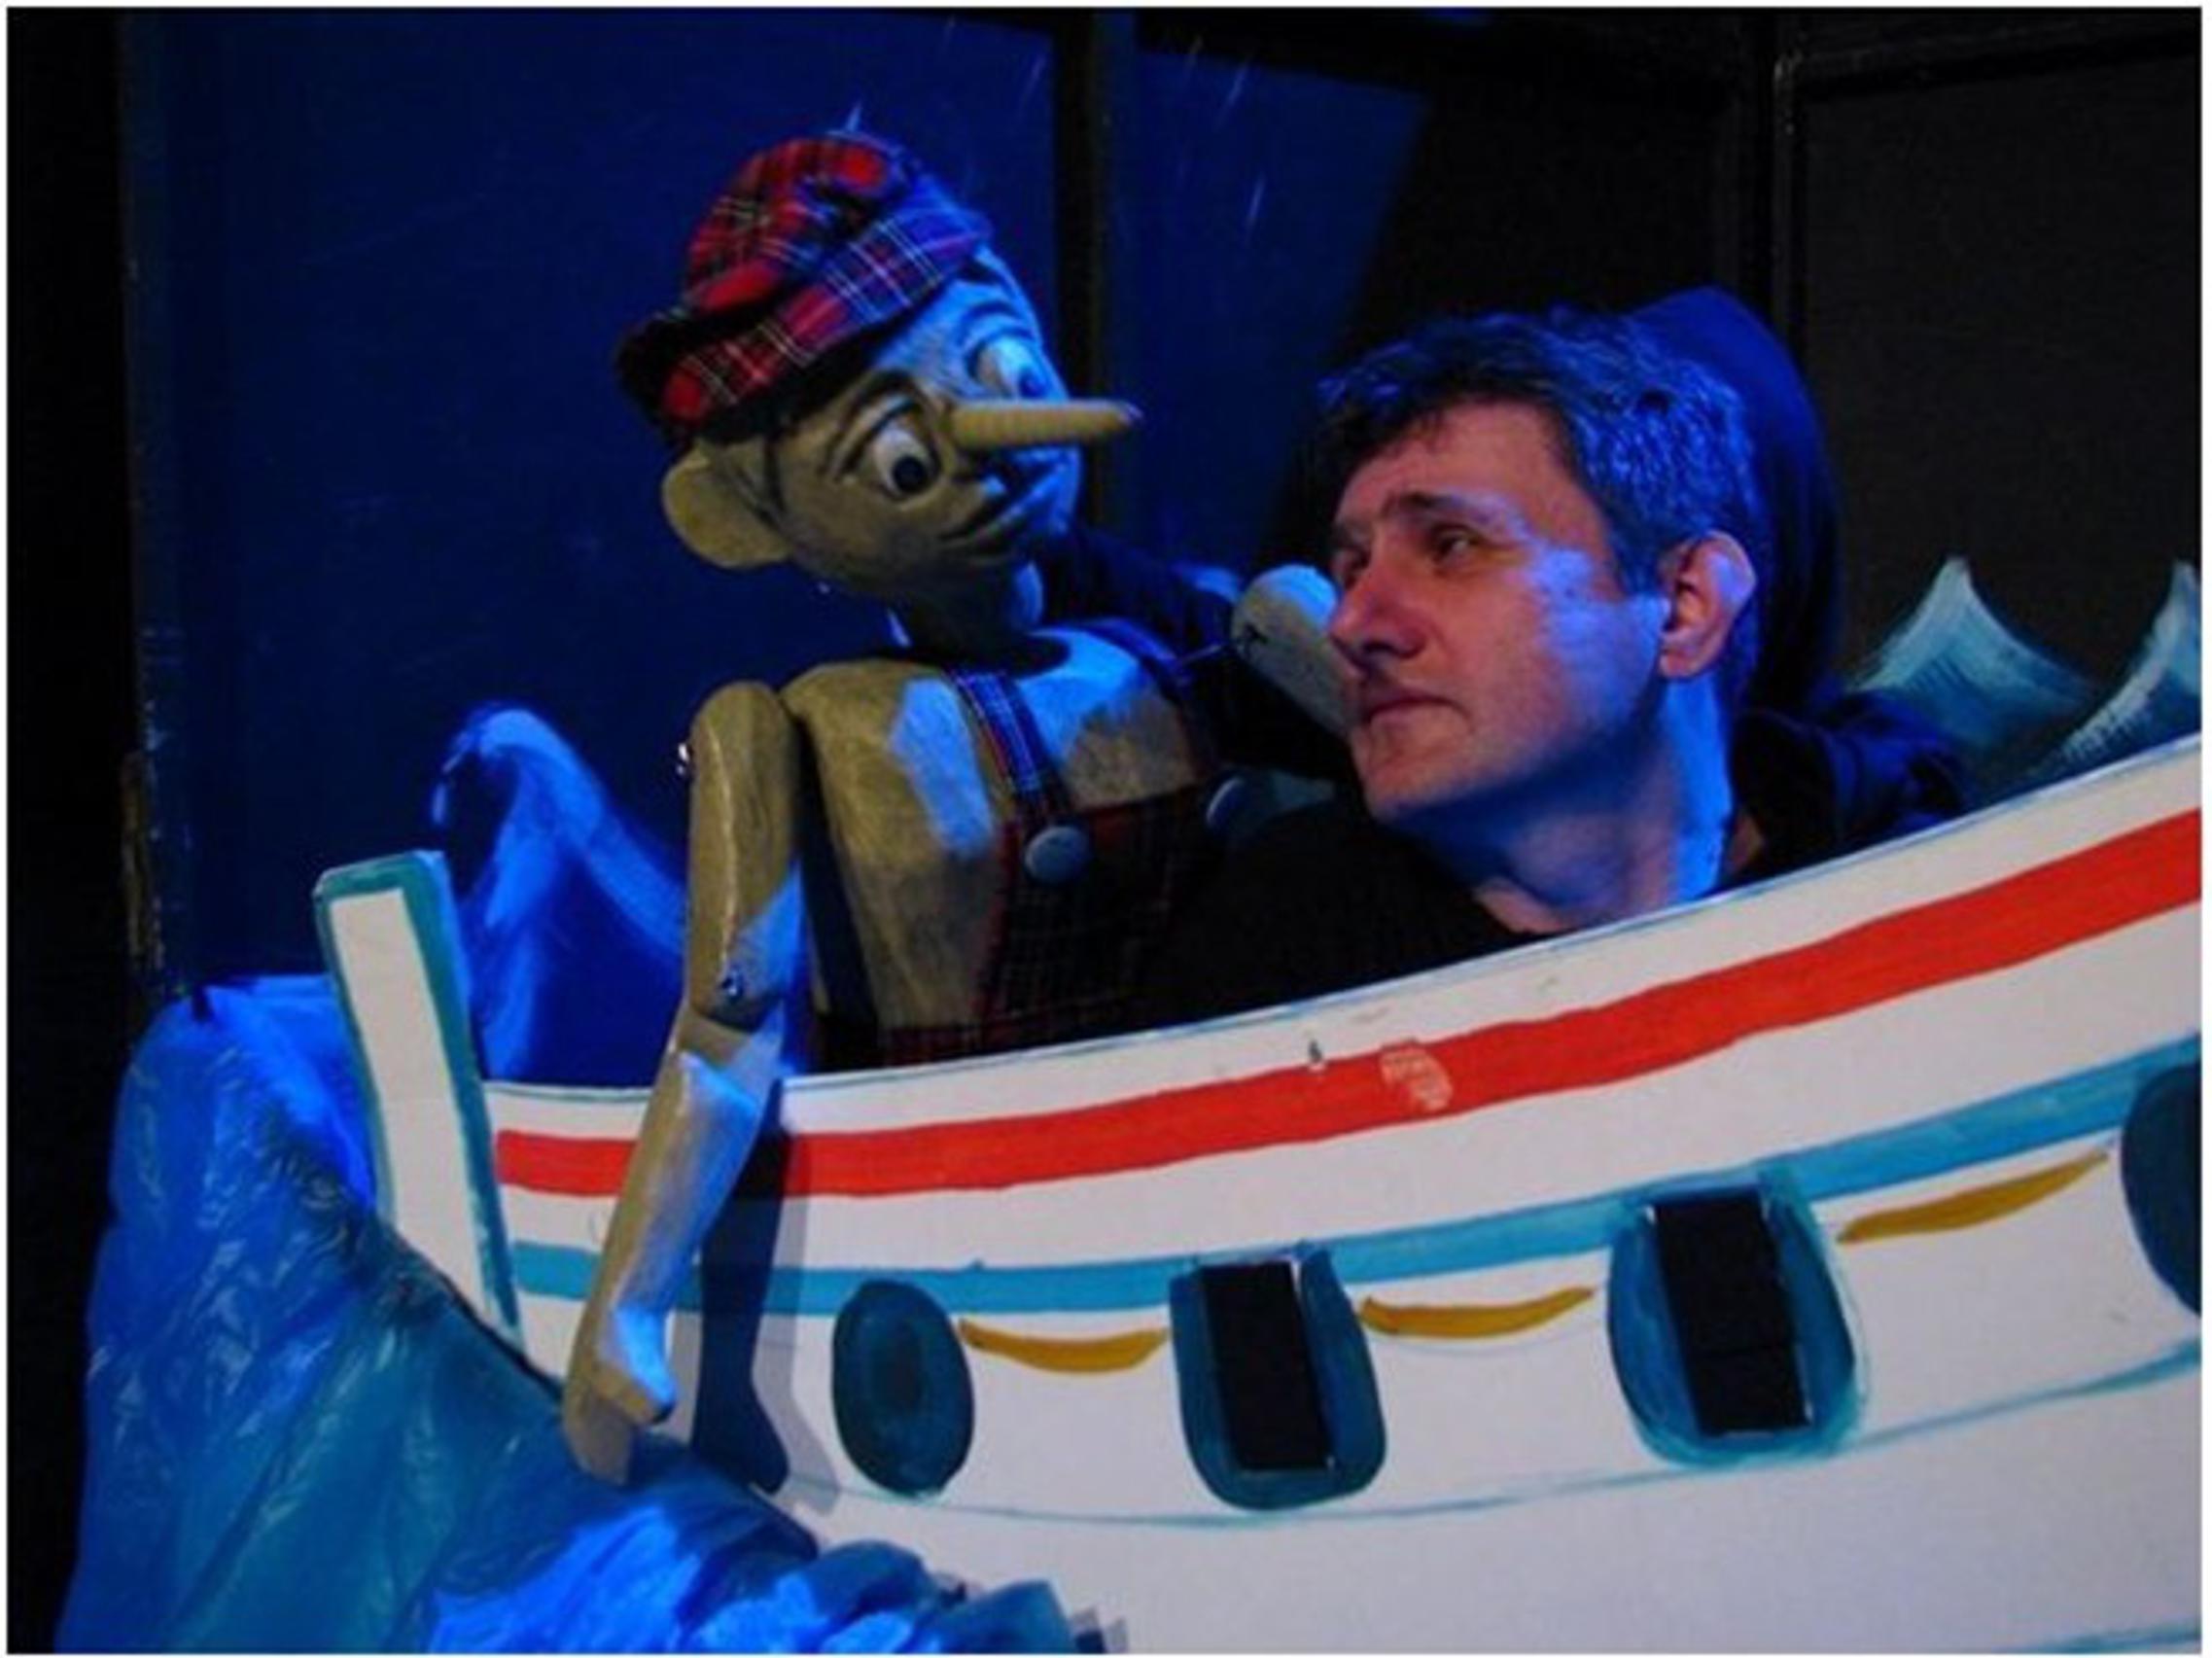 Detalj iz kazališne predstave 'Pinokio'